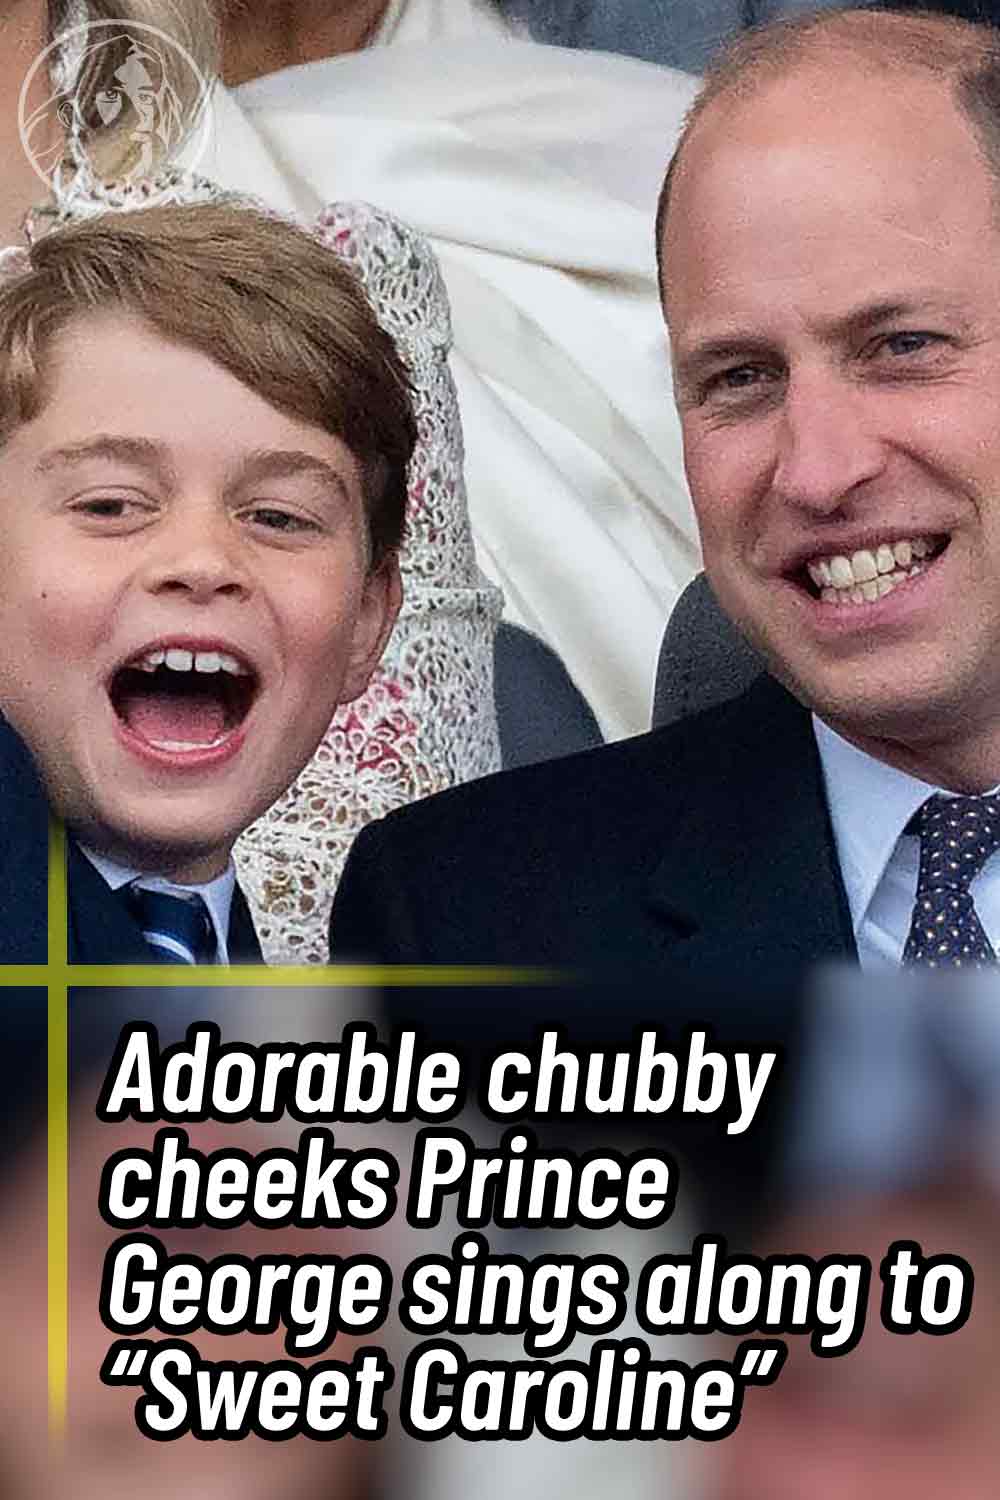 Adorable chubby cheeks Prince George sings along to “Sweet Caroline”